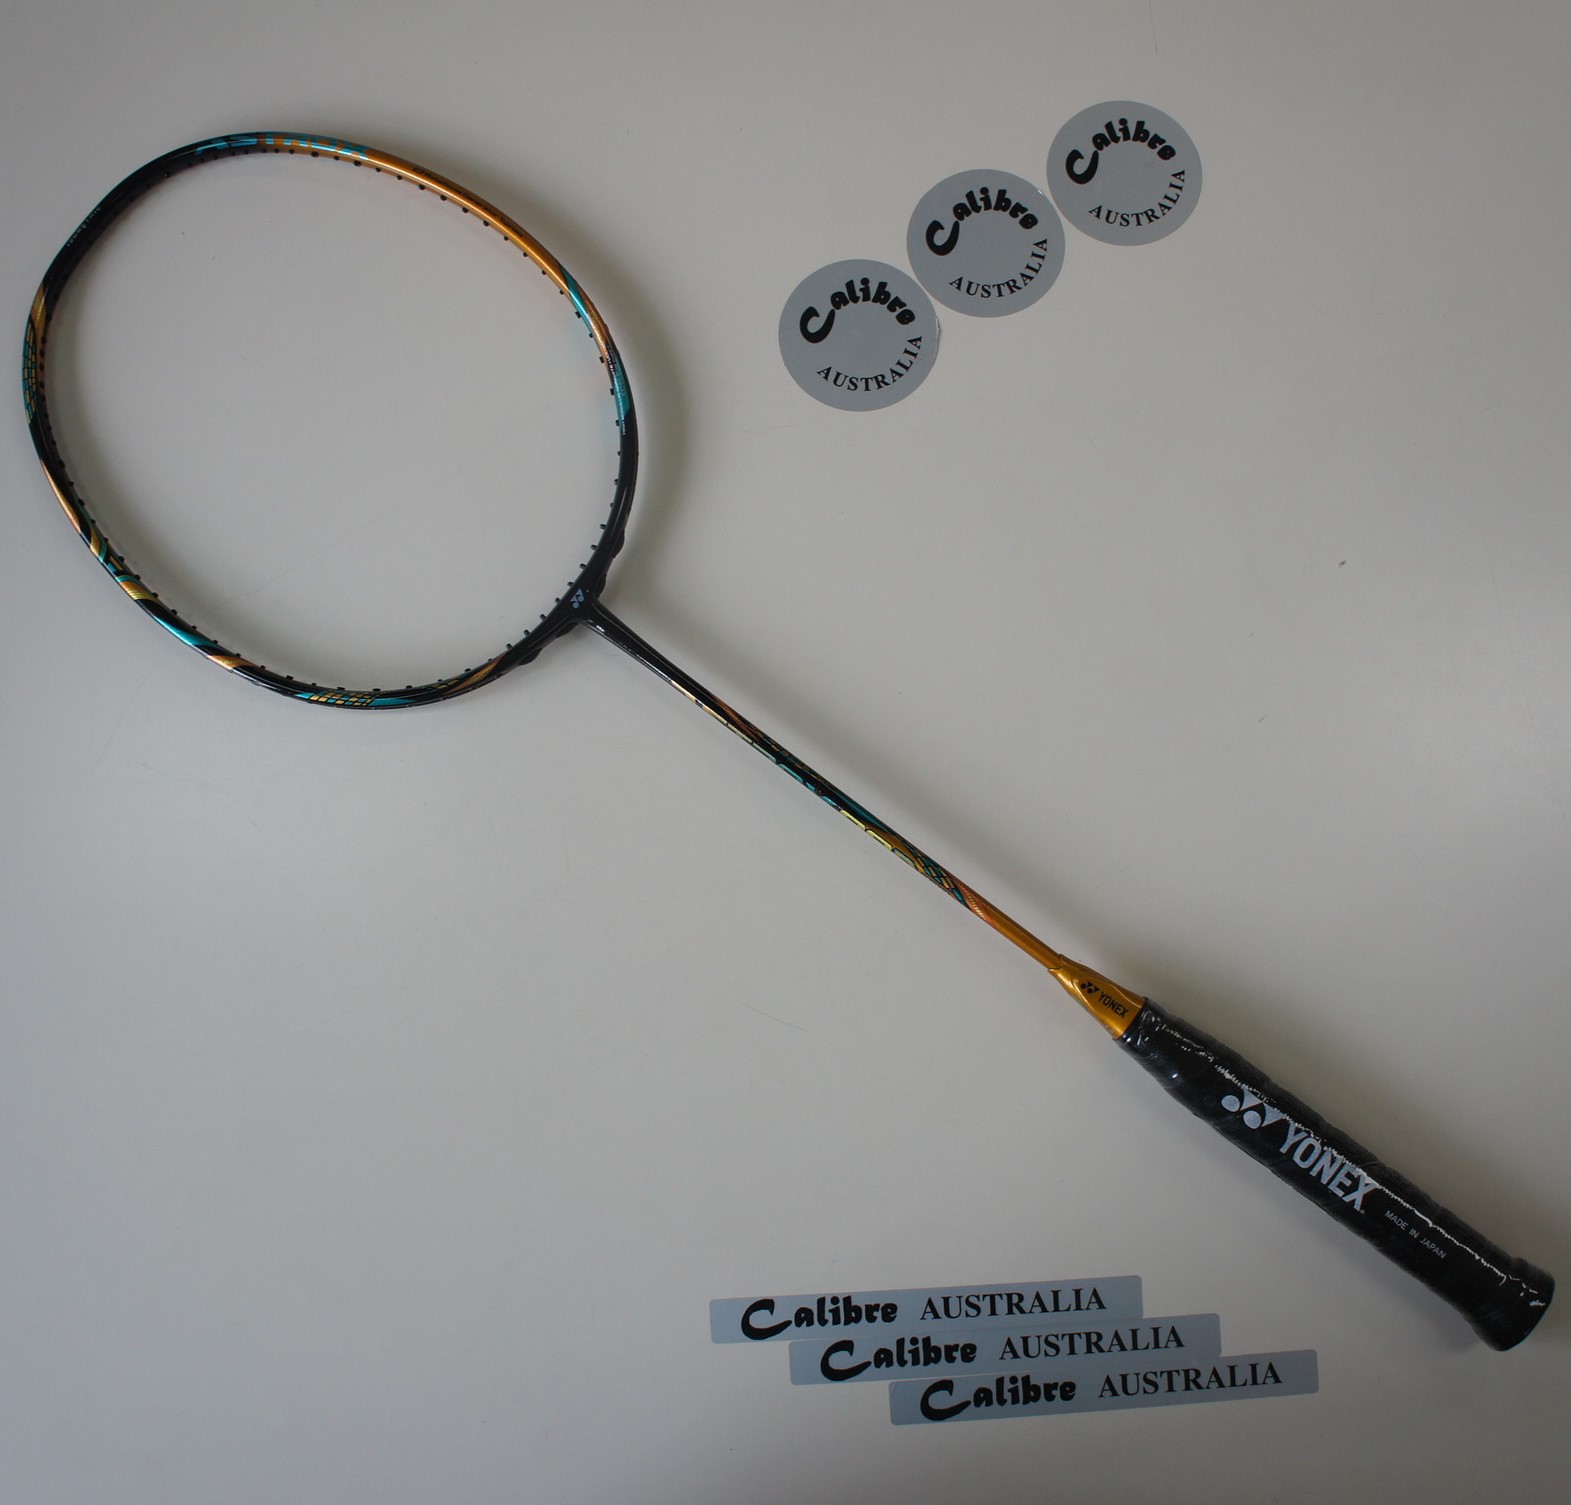 2021 YONEX Astrox 88D Pro Badminton Racquet 4UG5, AX88D Pro